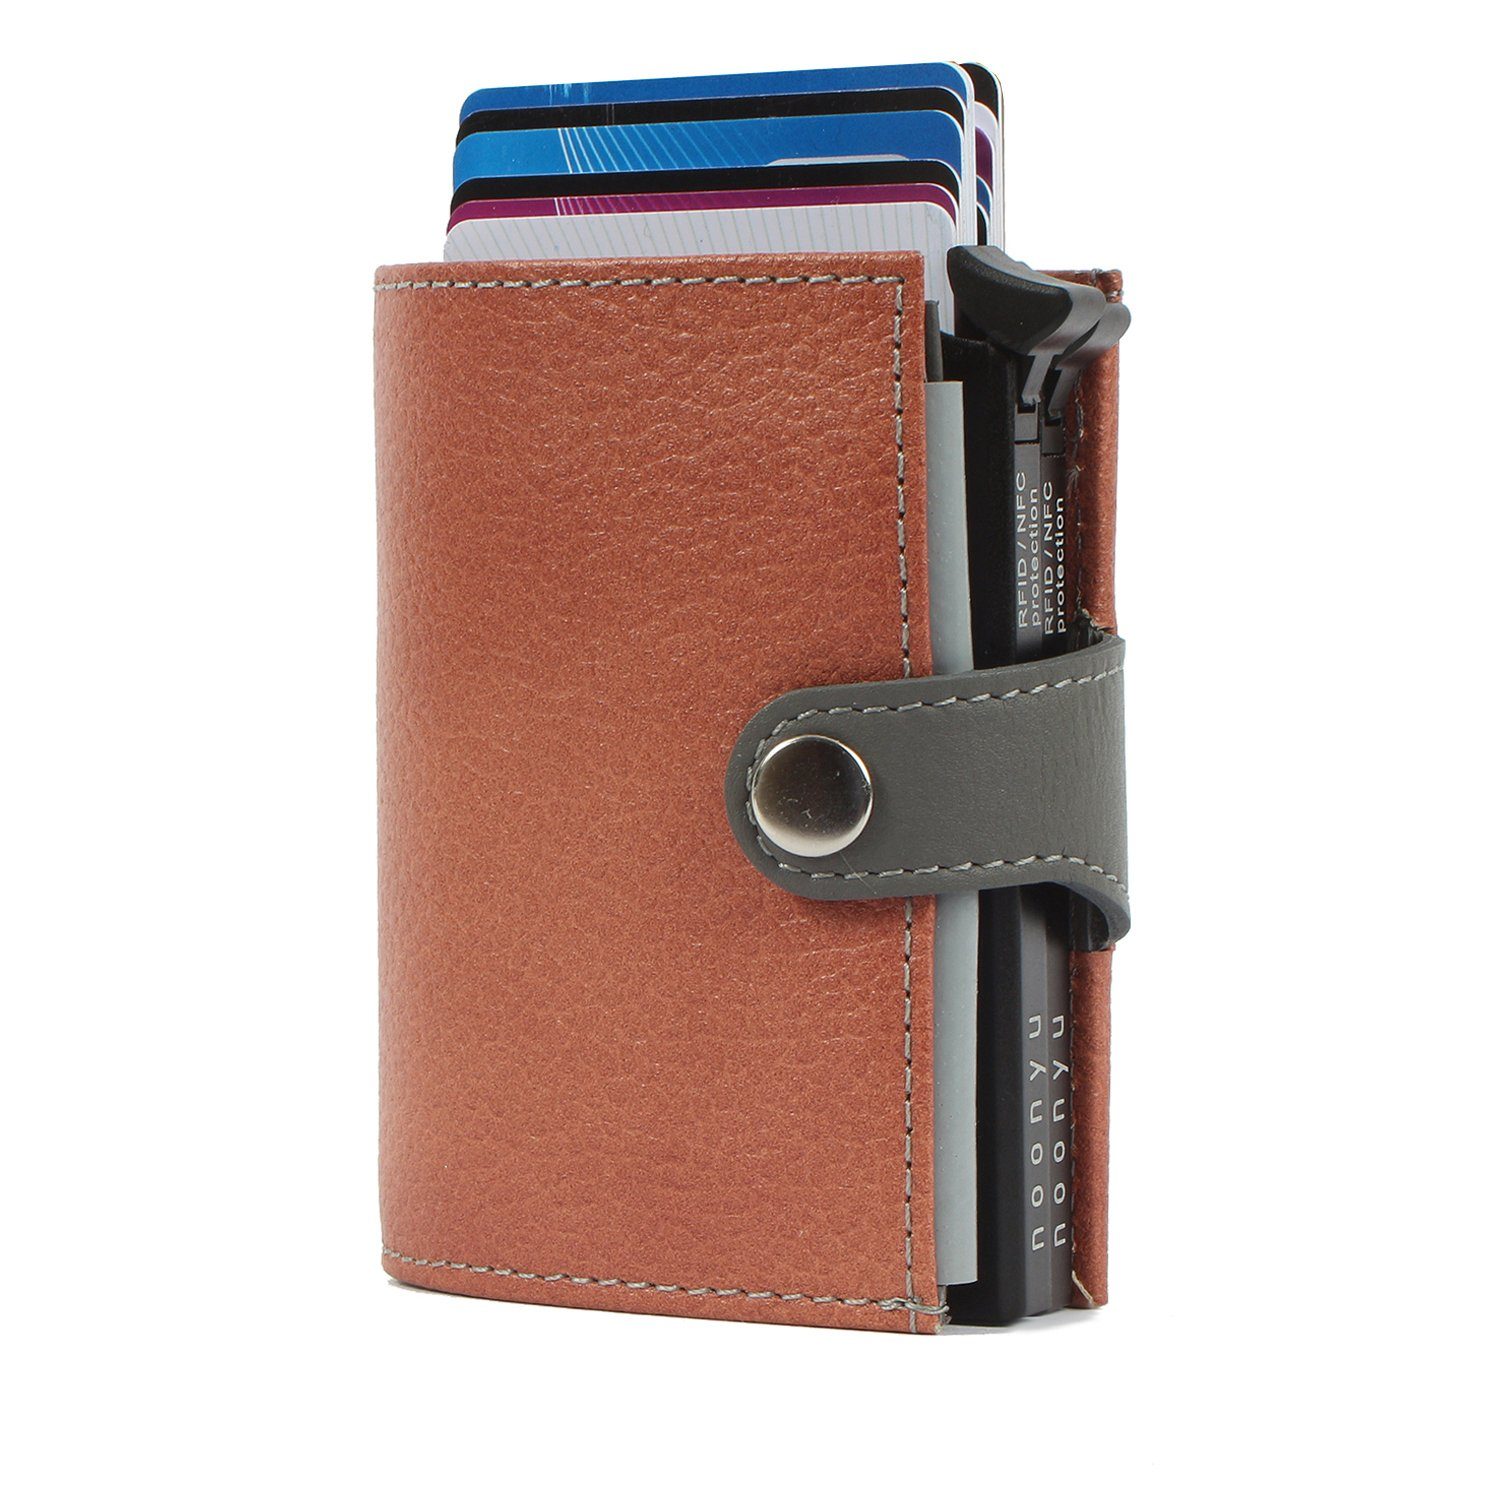 Margelisch Mini Geldbörse noonyu double RFID Kreditkartenbörse leather, Upcycling Leder salmon aus